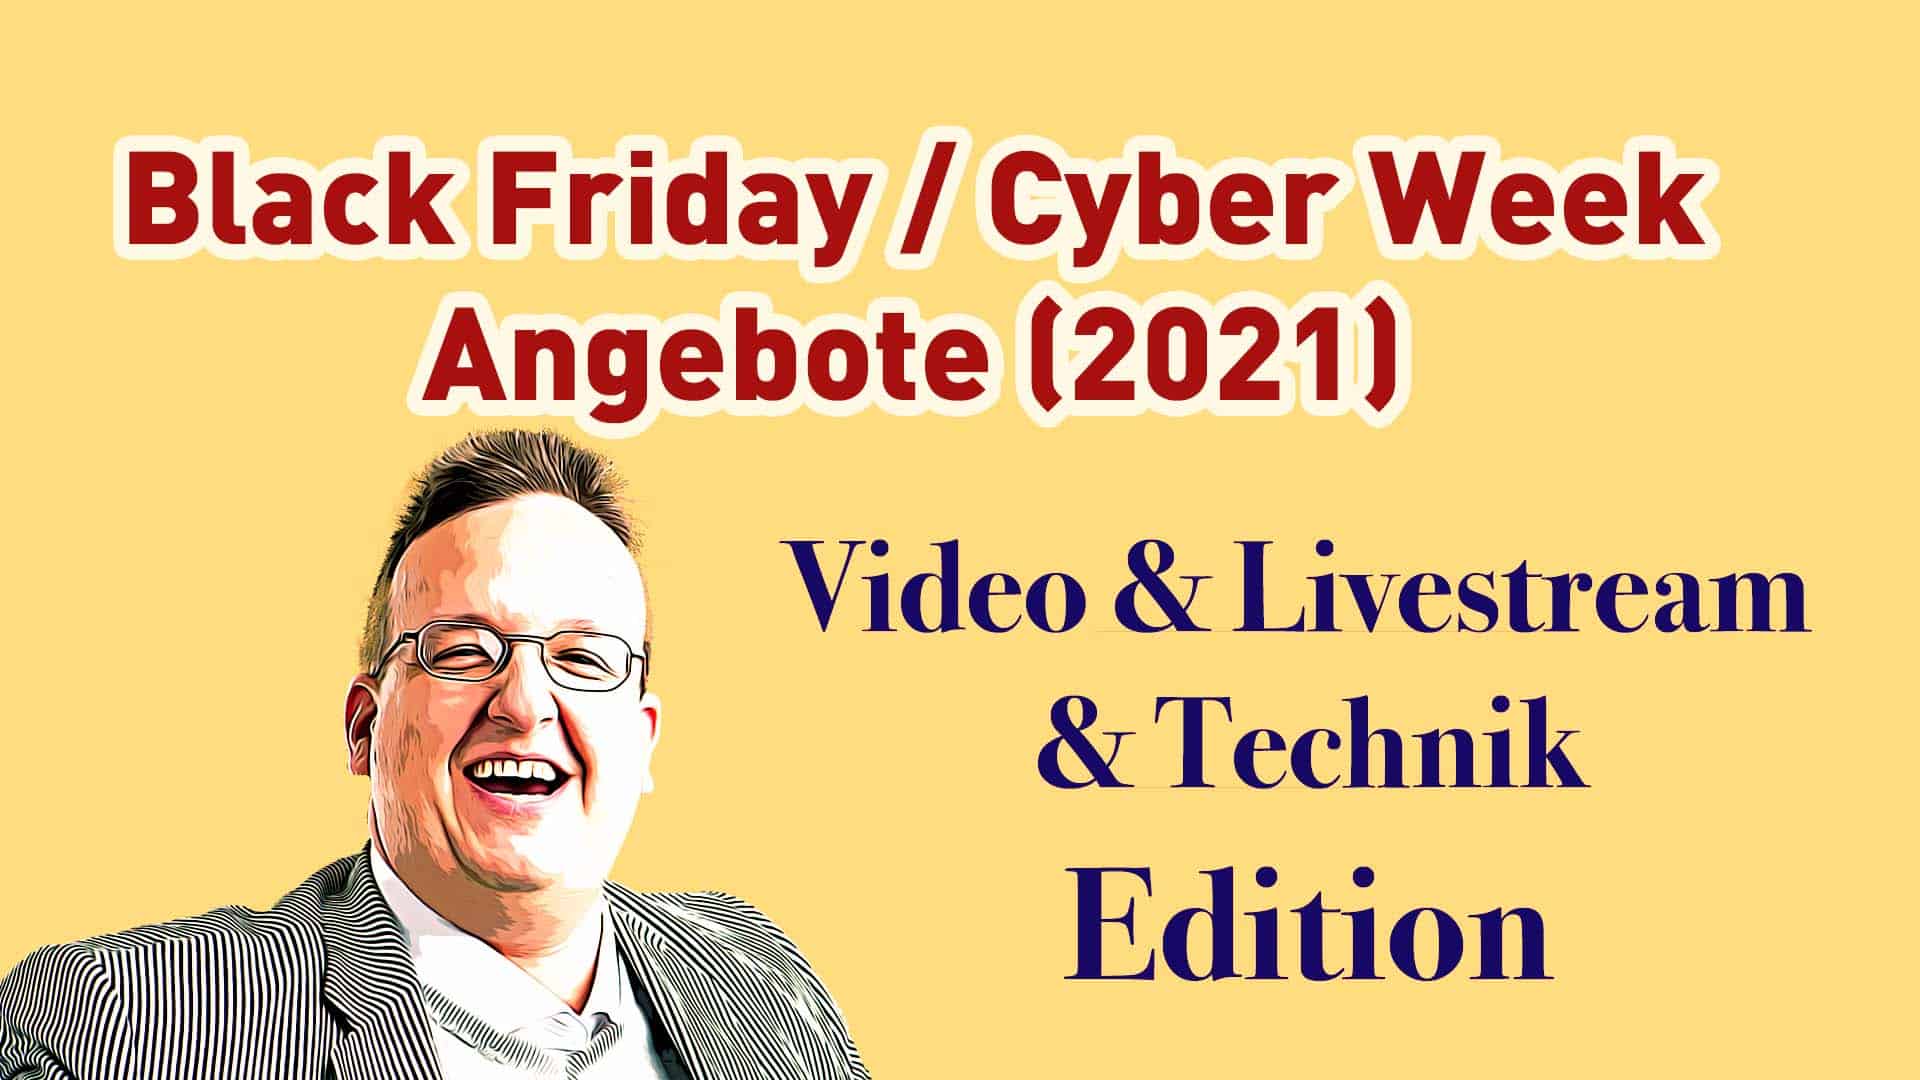 Livestream, Videoproduktion & Technik Black Friday Aktionen 2021